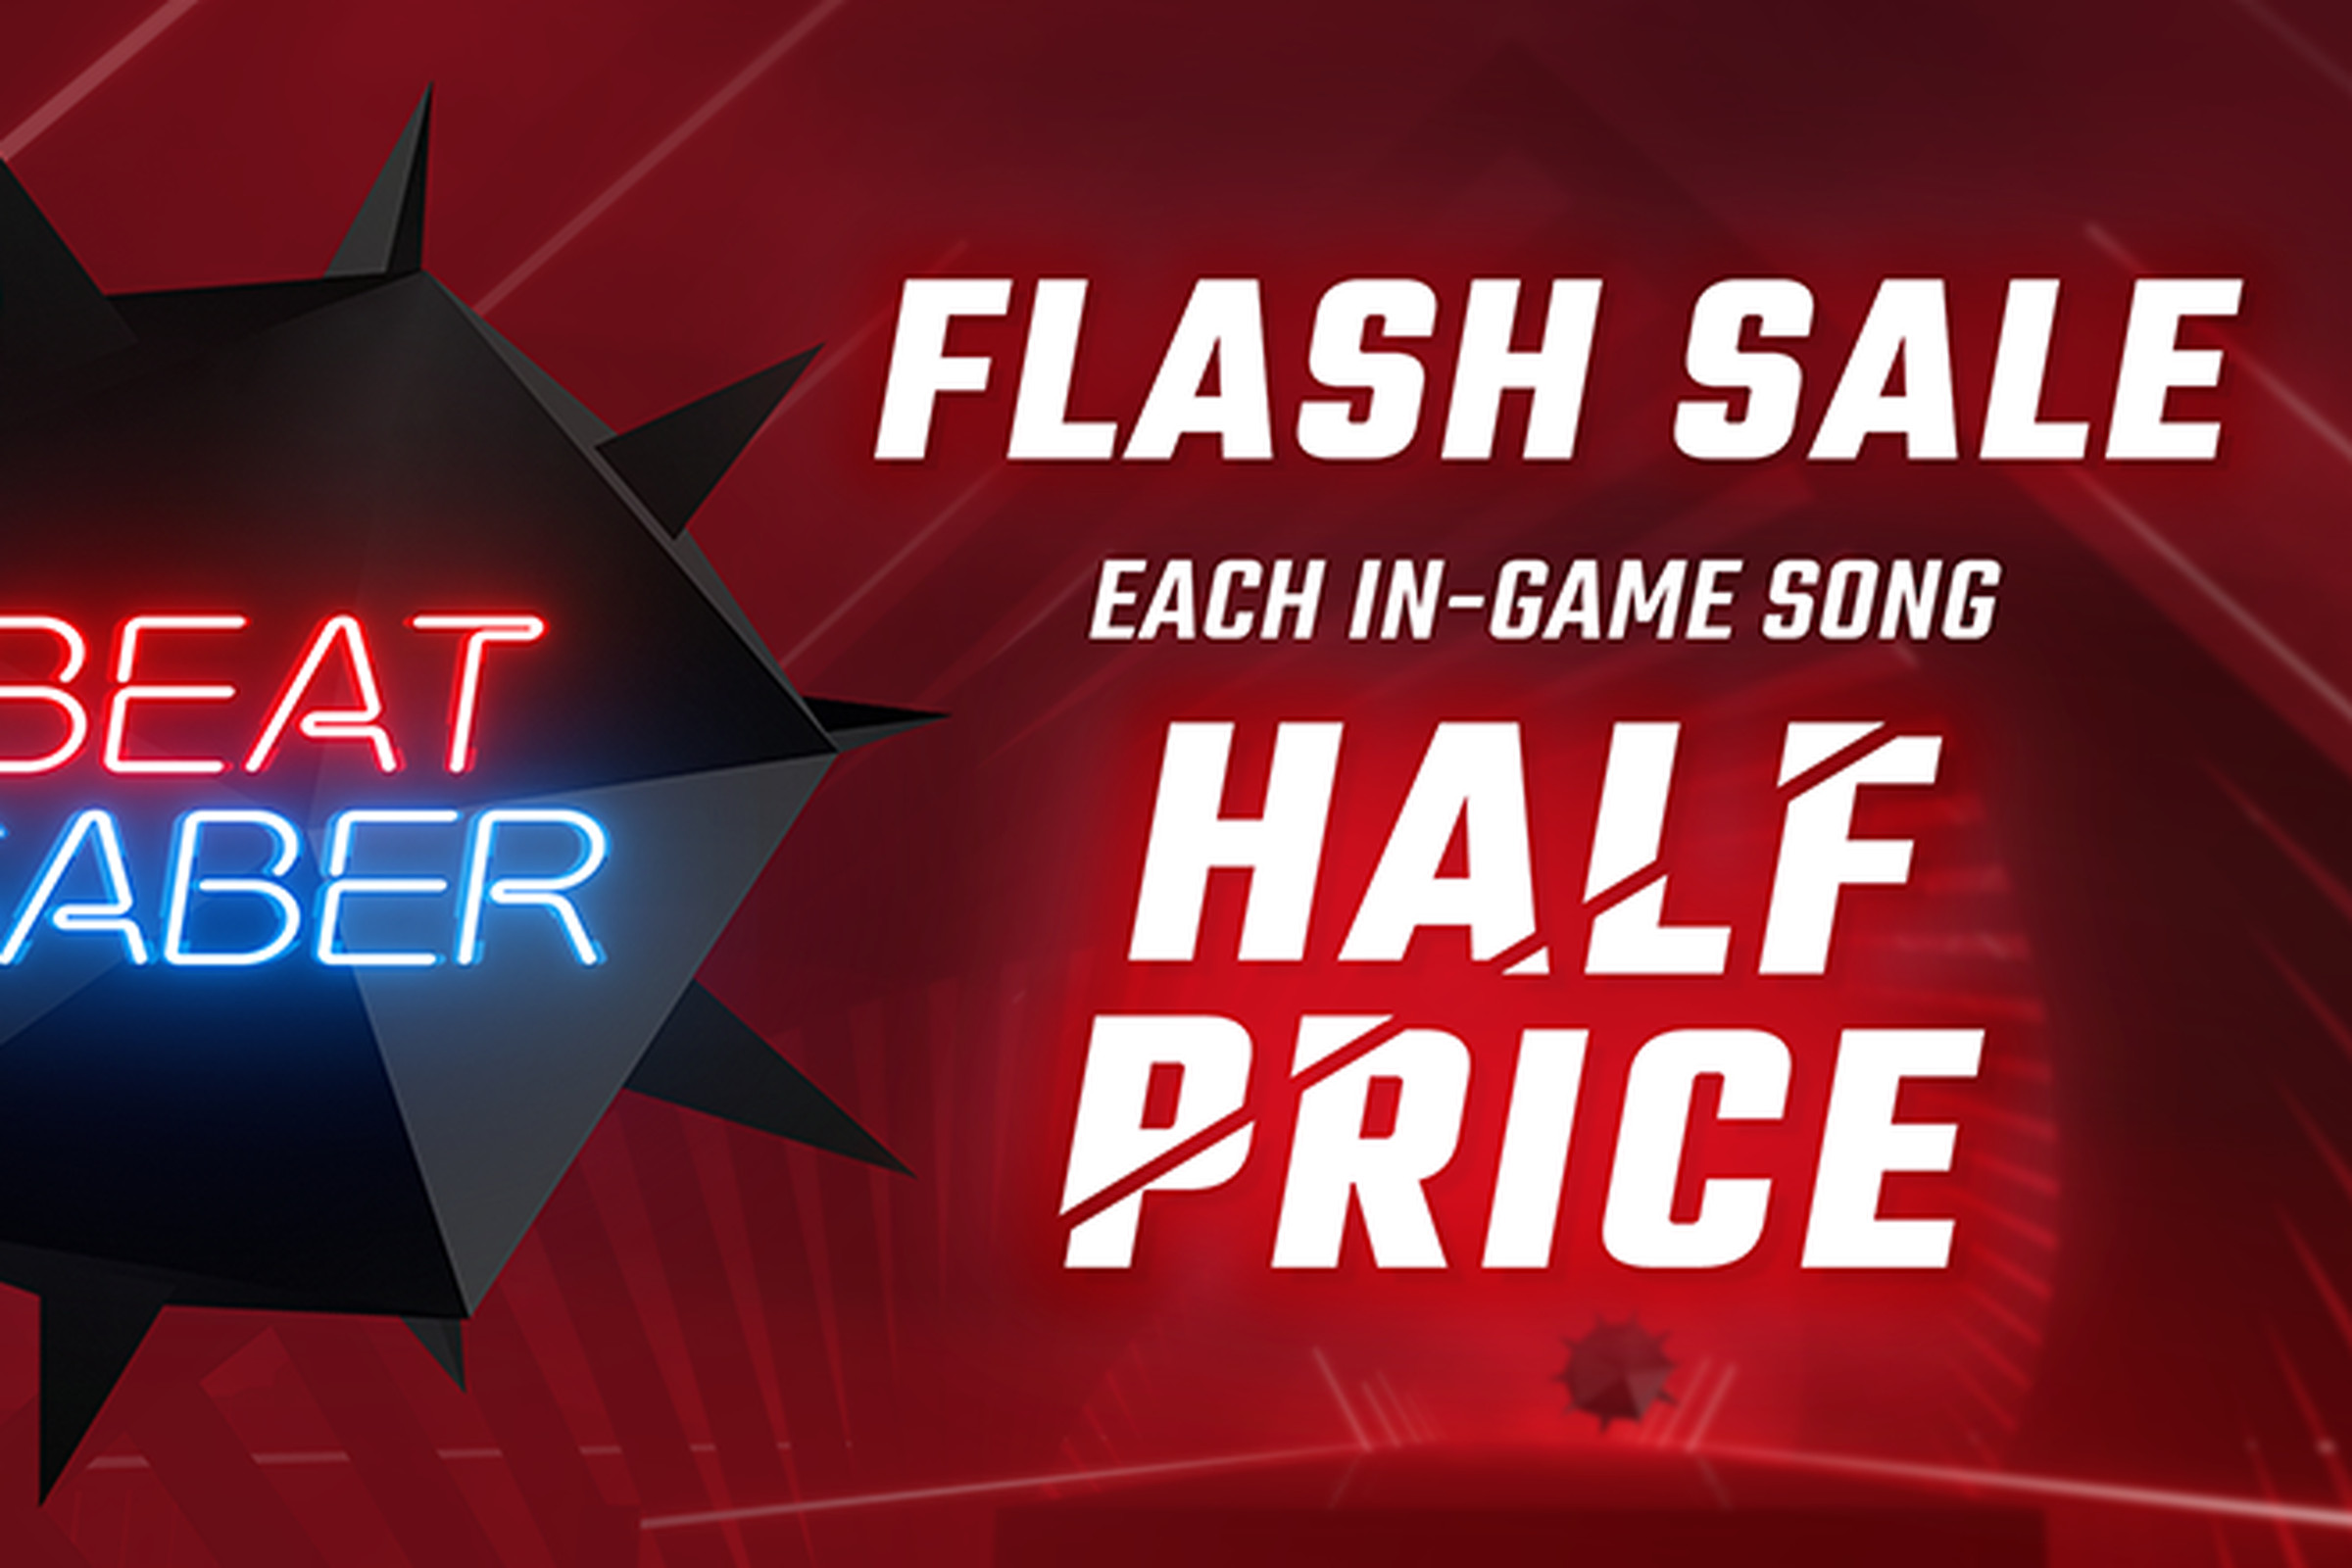 Beat Saber’s flash sale graphic